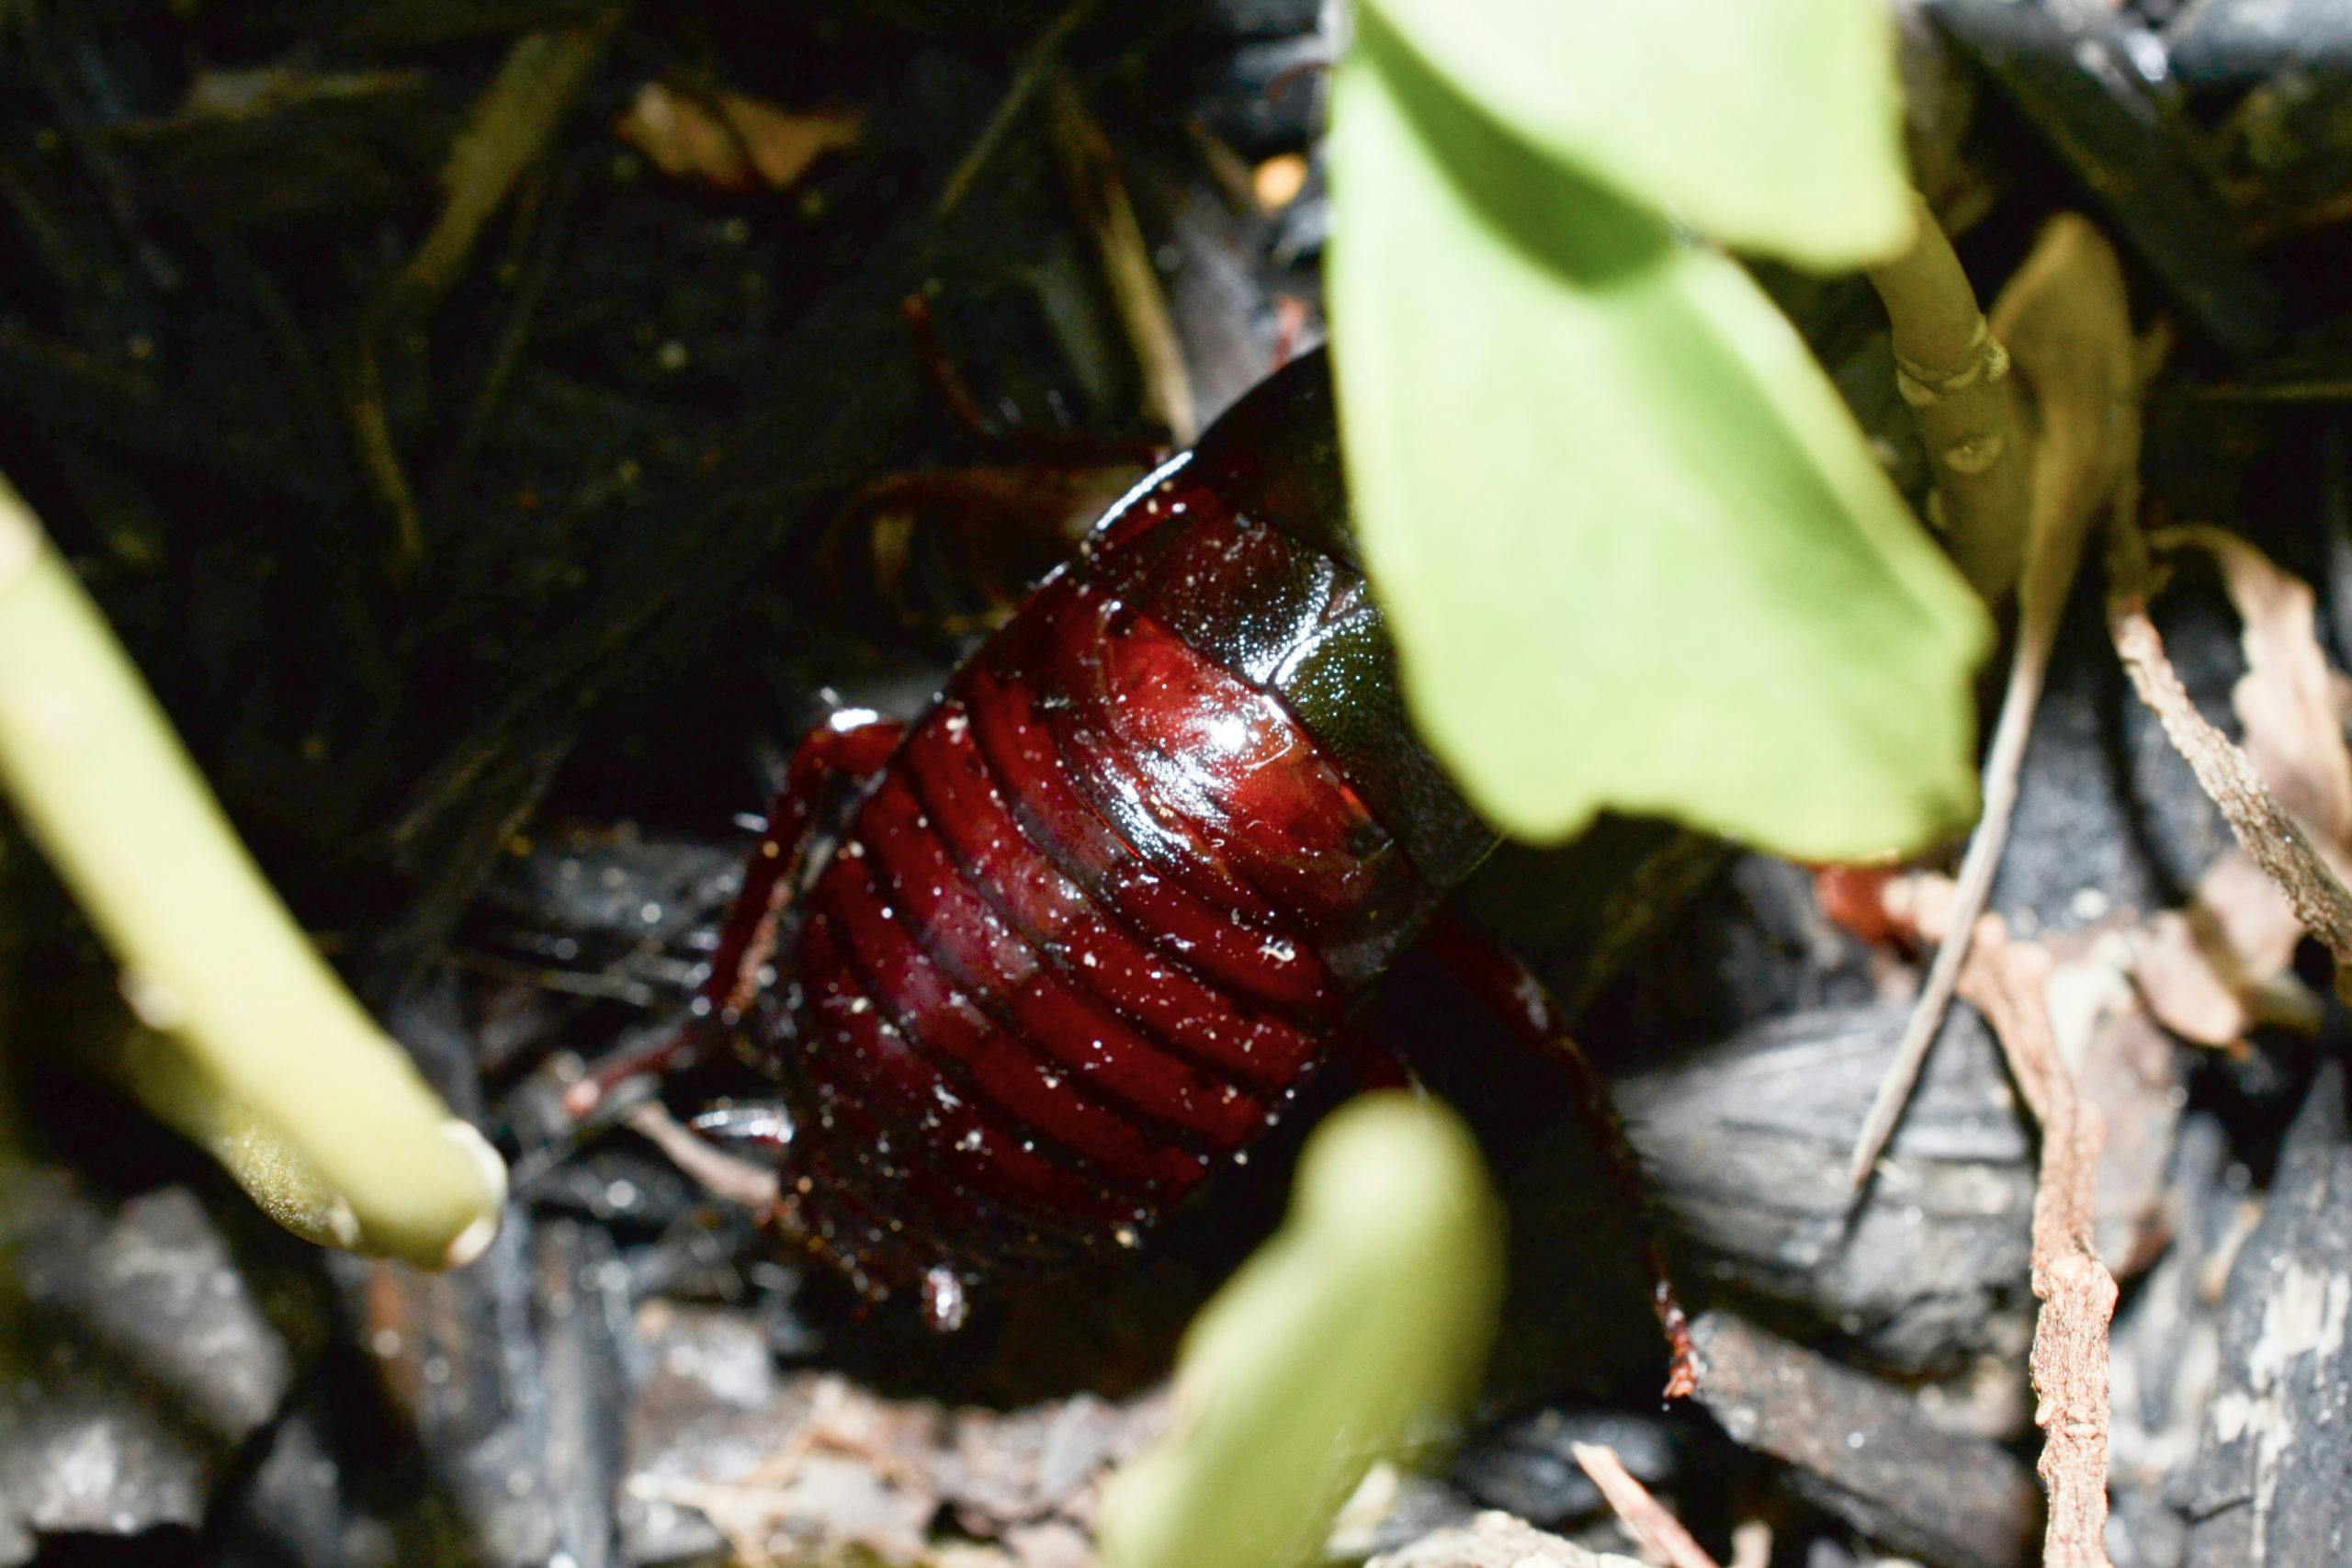 Florida-woods-cockroach-behind-leaves-3